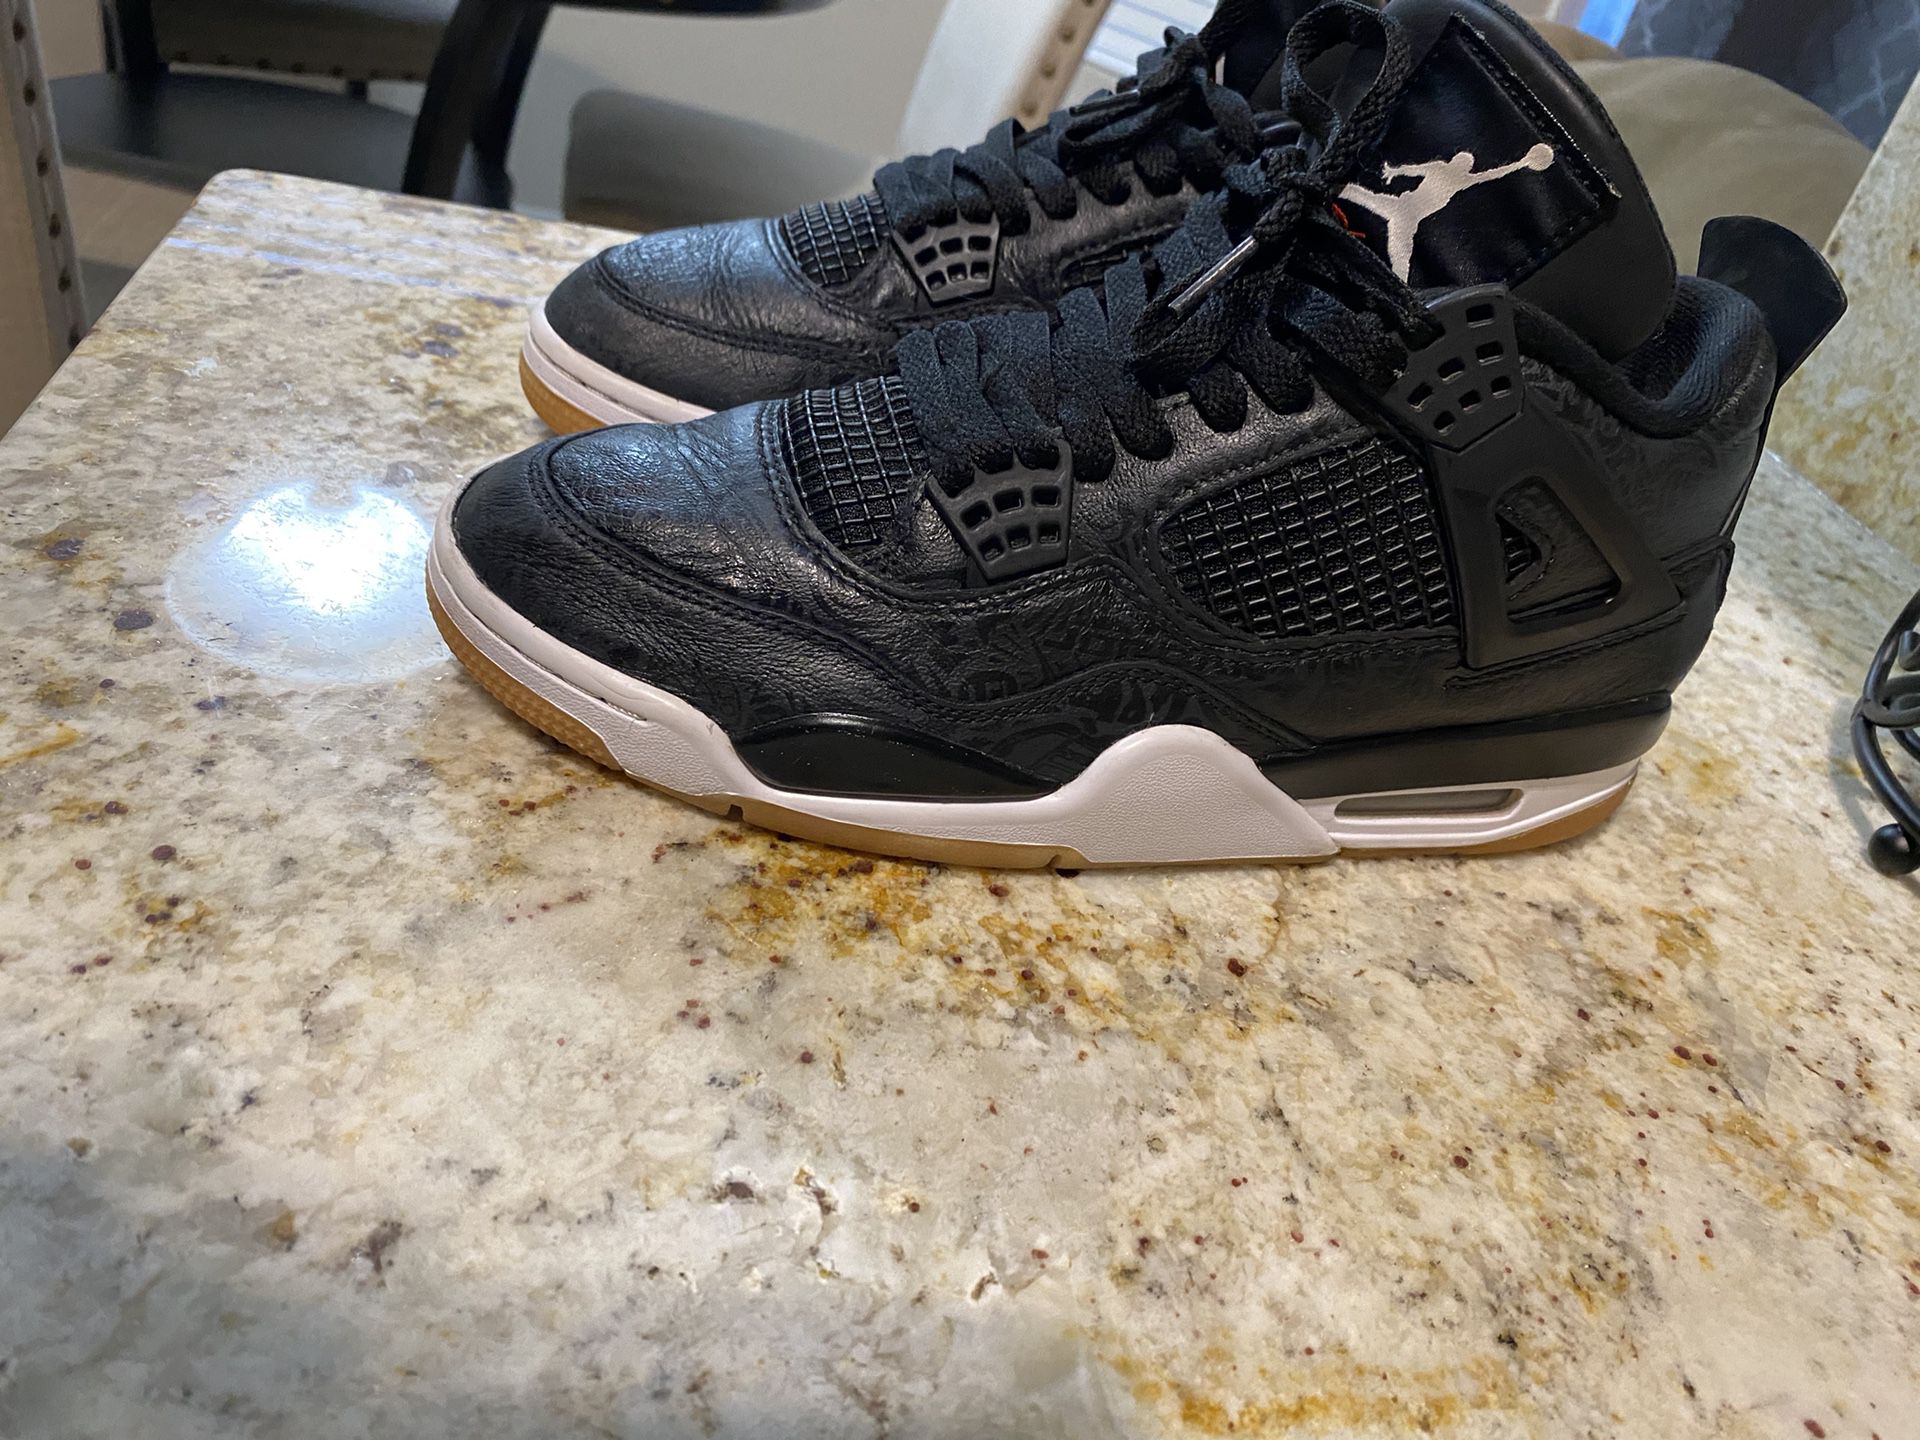 Jordan 4 Size 8 for Sale in Albuquerque, NM - OfferUp